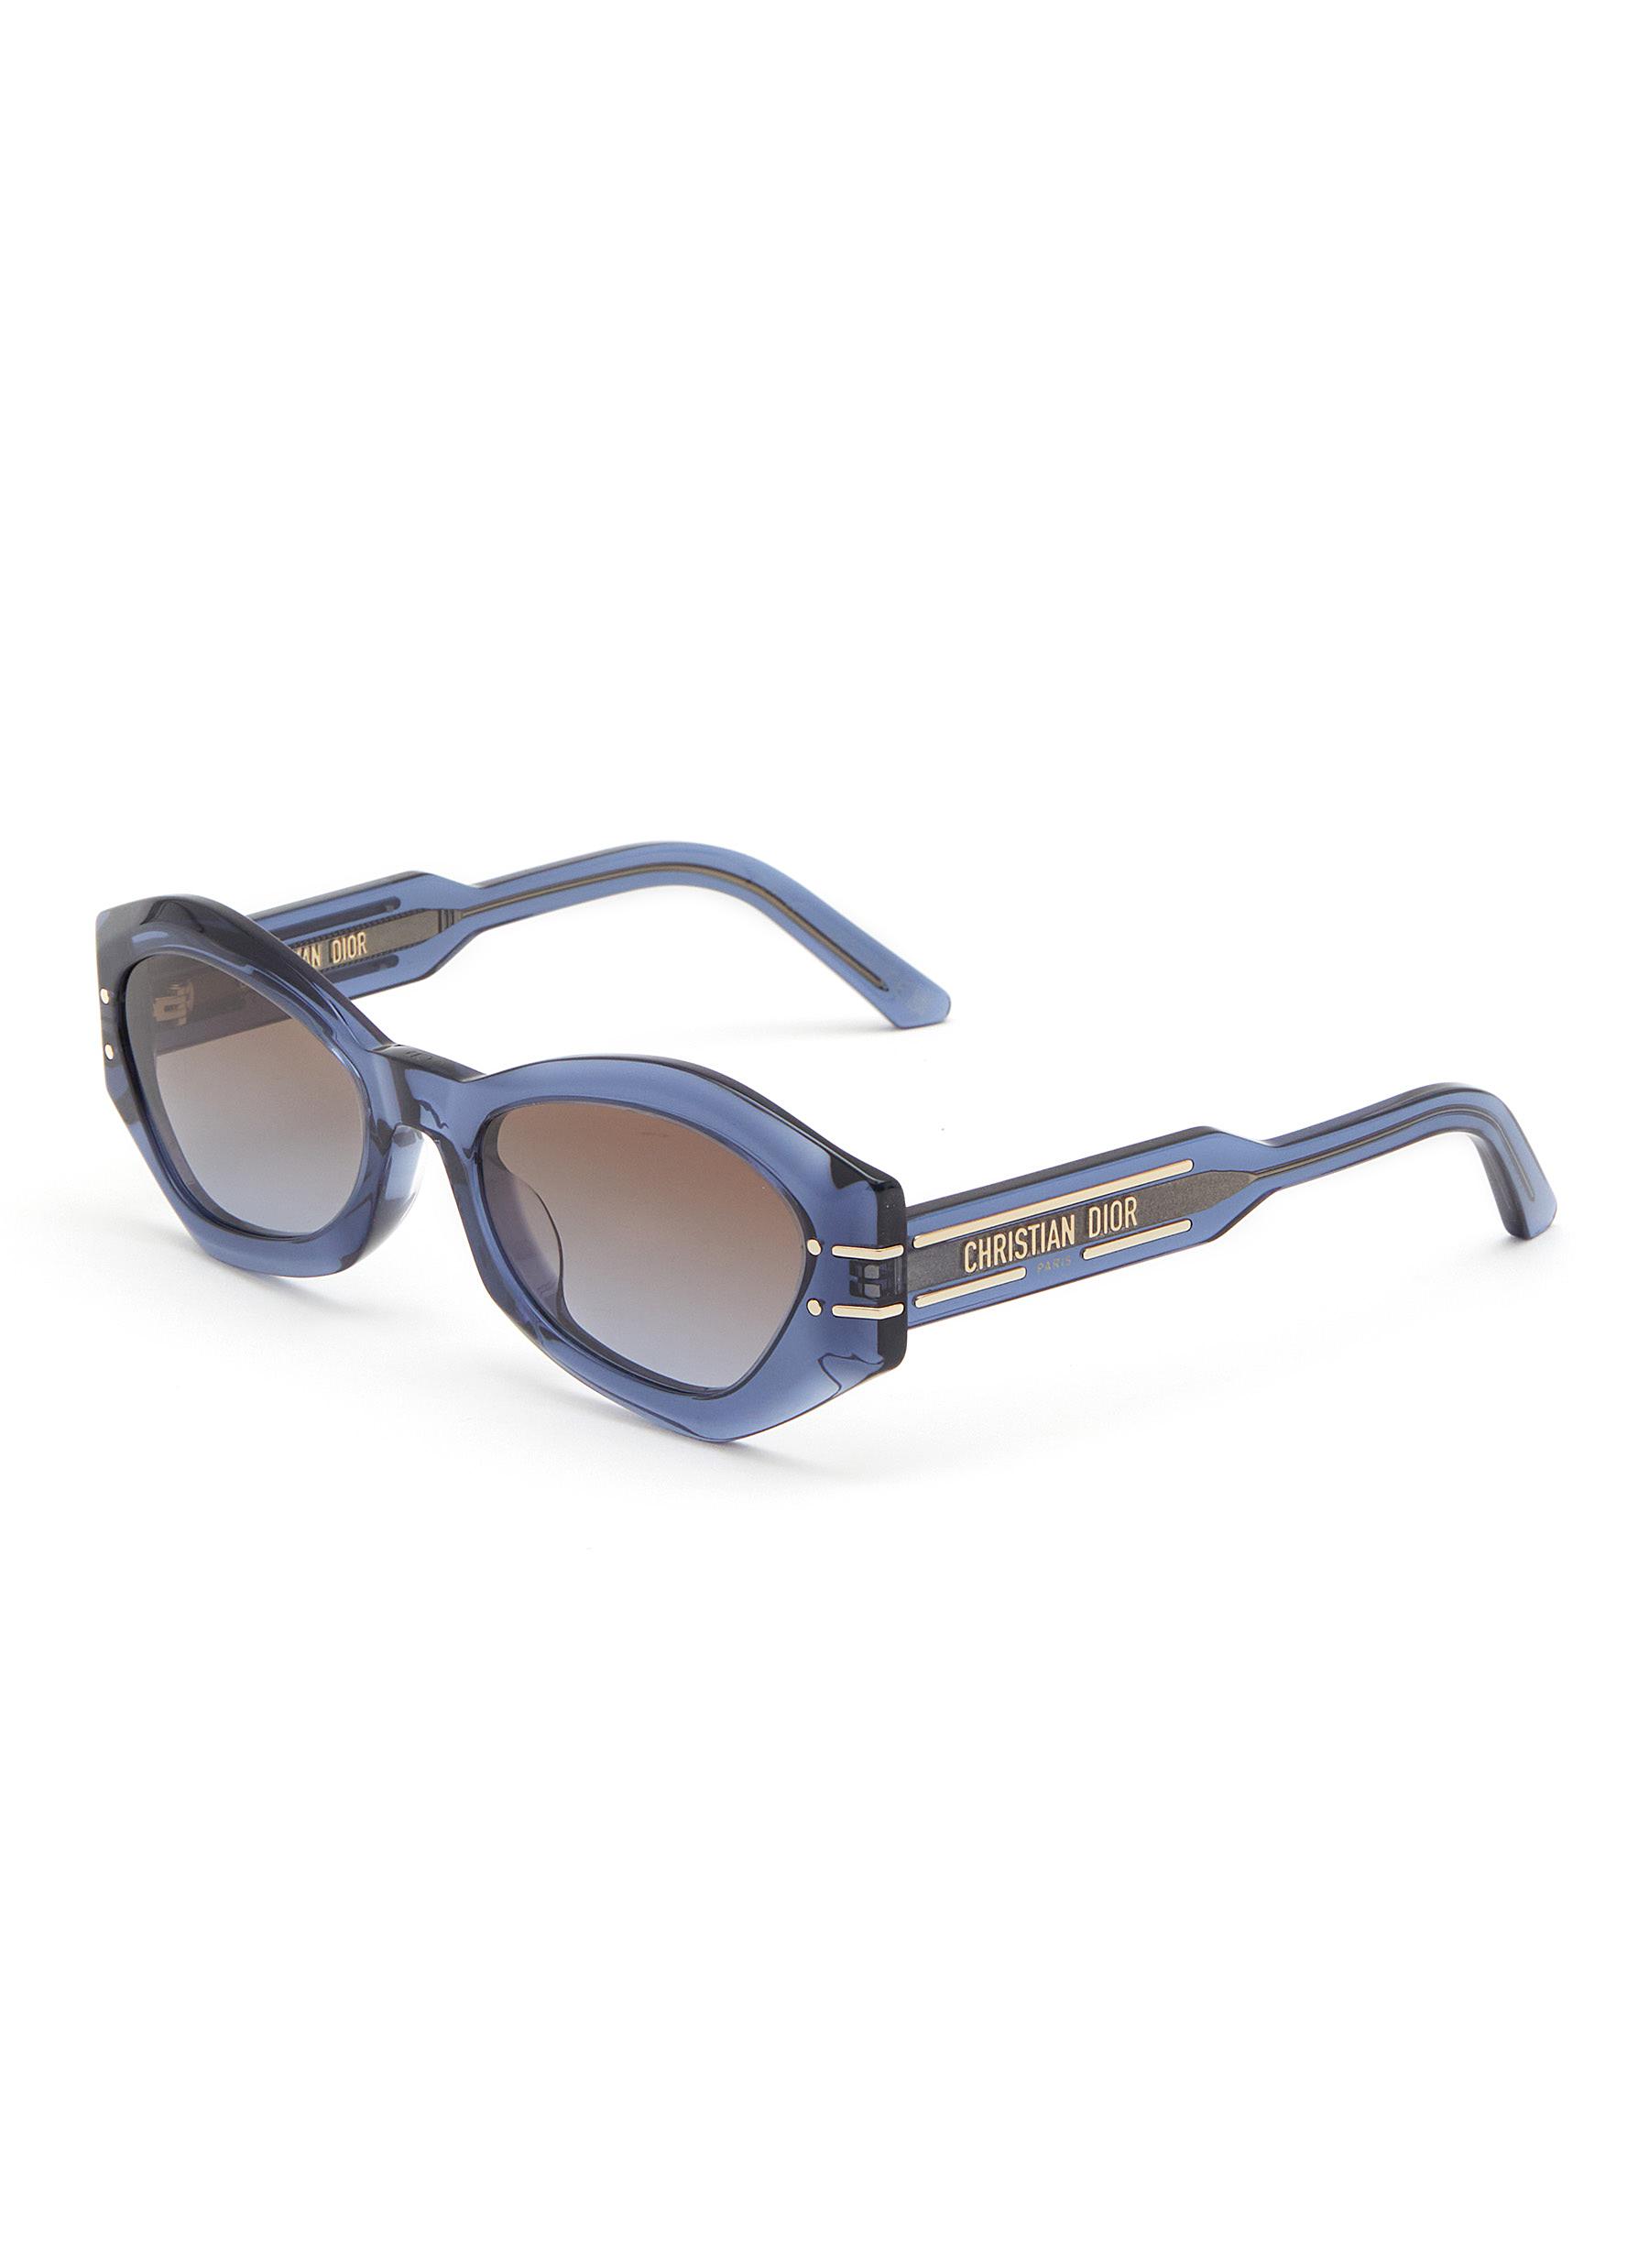 Sunglasses for Men - Buy Men's Stylish Sunglasses Online | Eyewearlabs-lmd.edu.vn